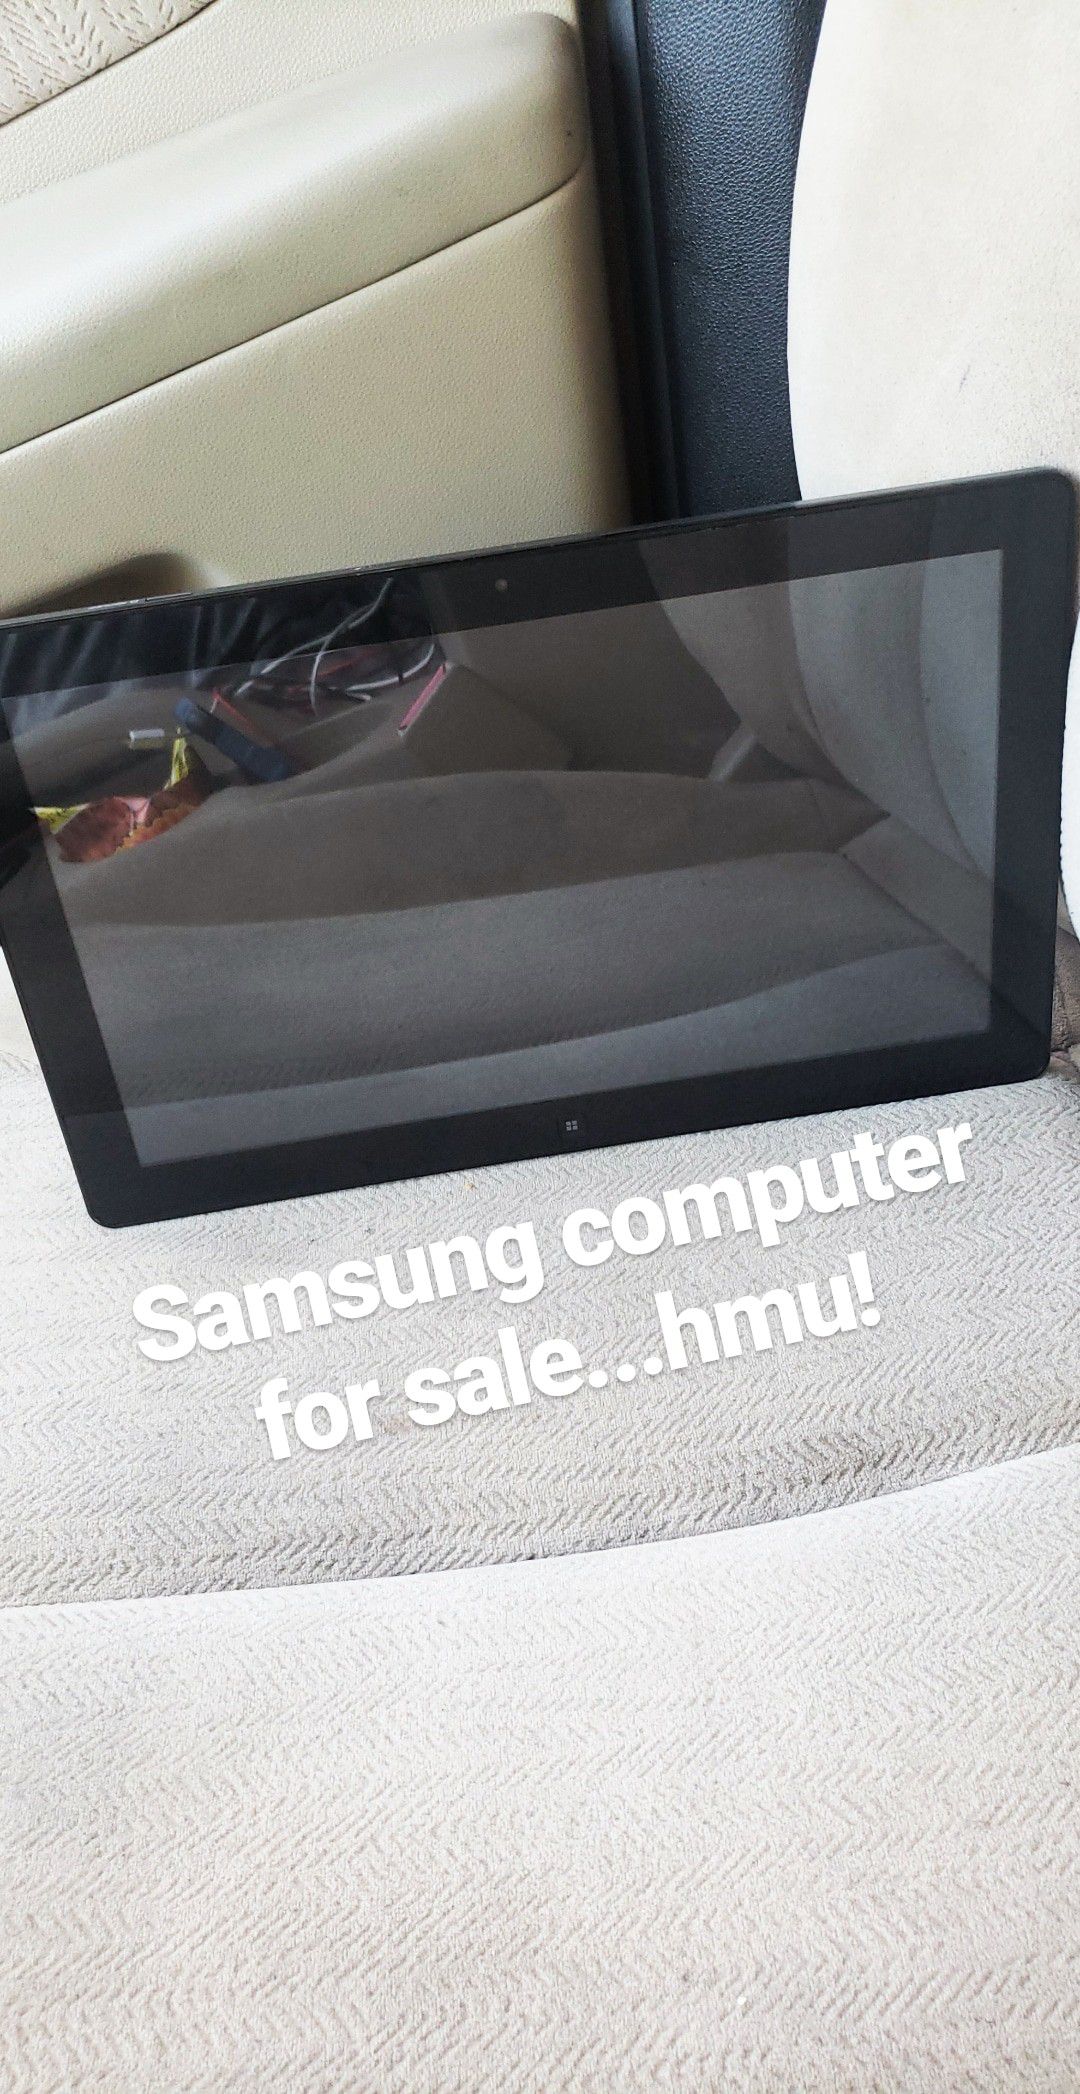 Samsung computer/ tablet